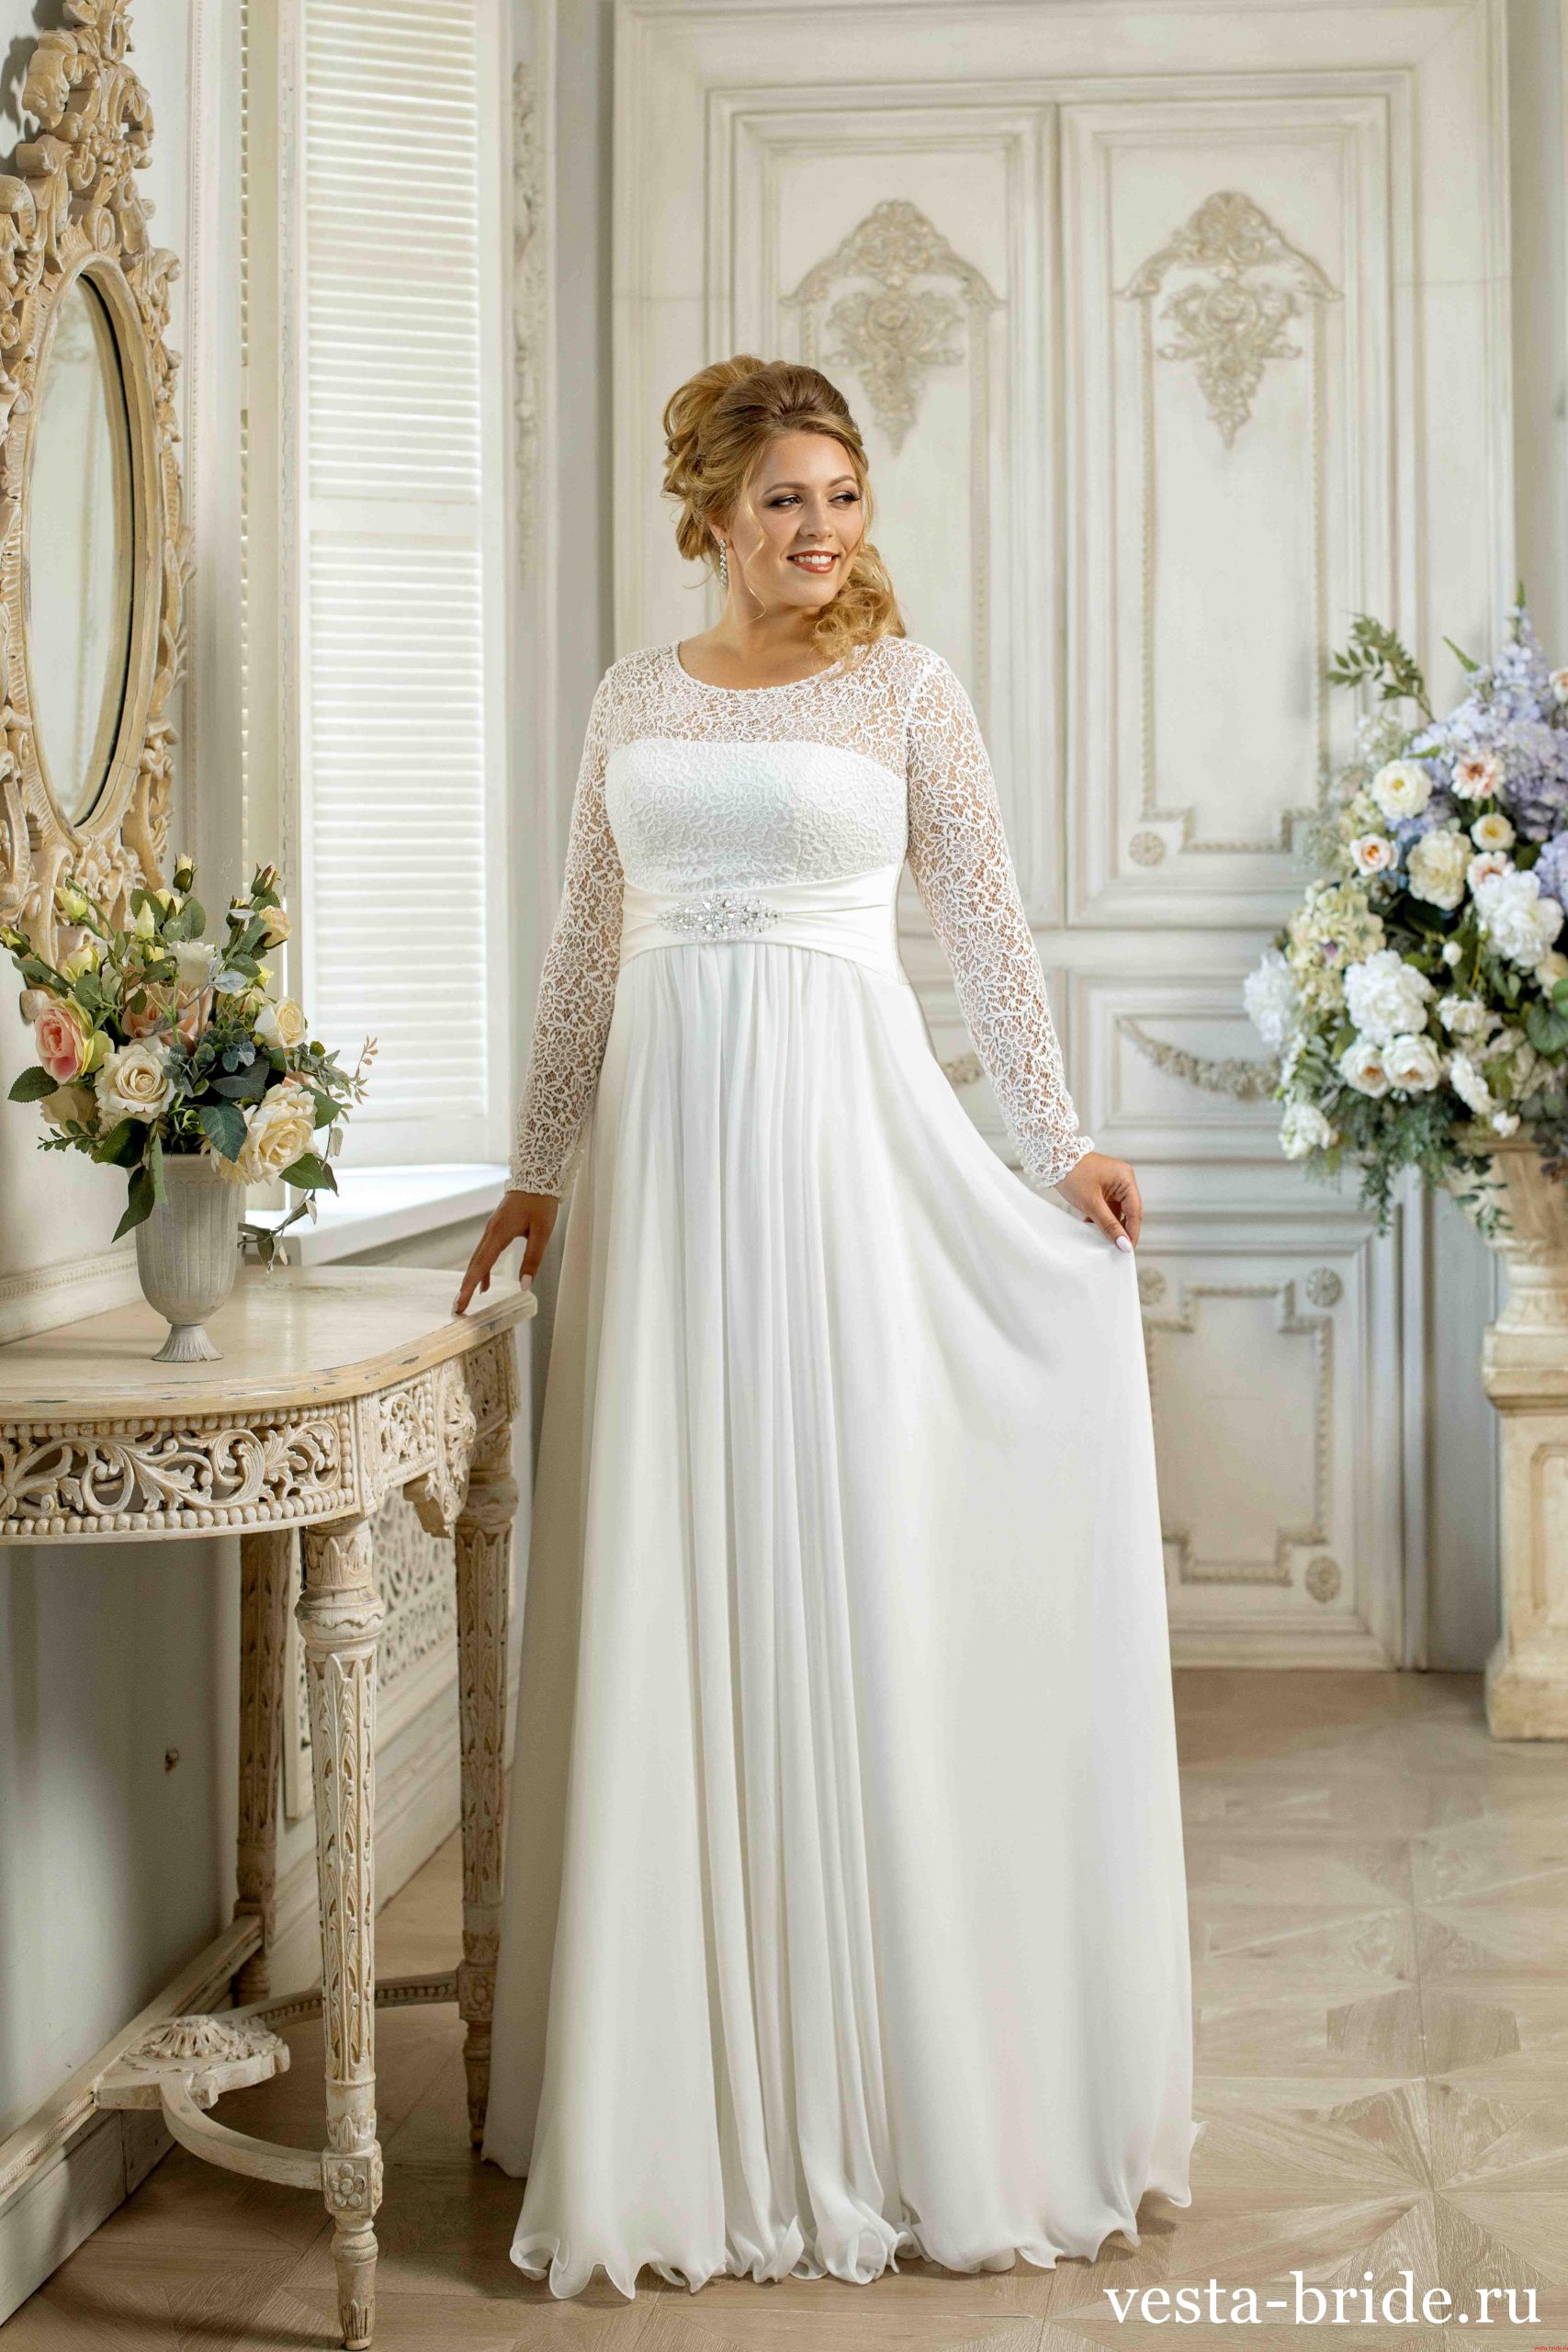 kqc4mp9nttlm7jg60o5arcrv scaled Закрытое свадебное платье Ампир (в греческом стиле) D-13-Plus Size